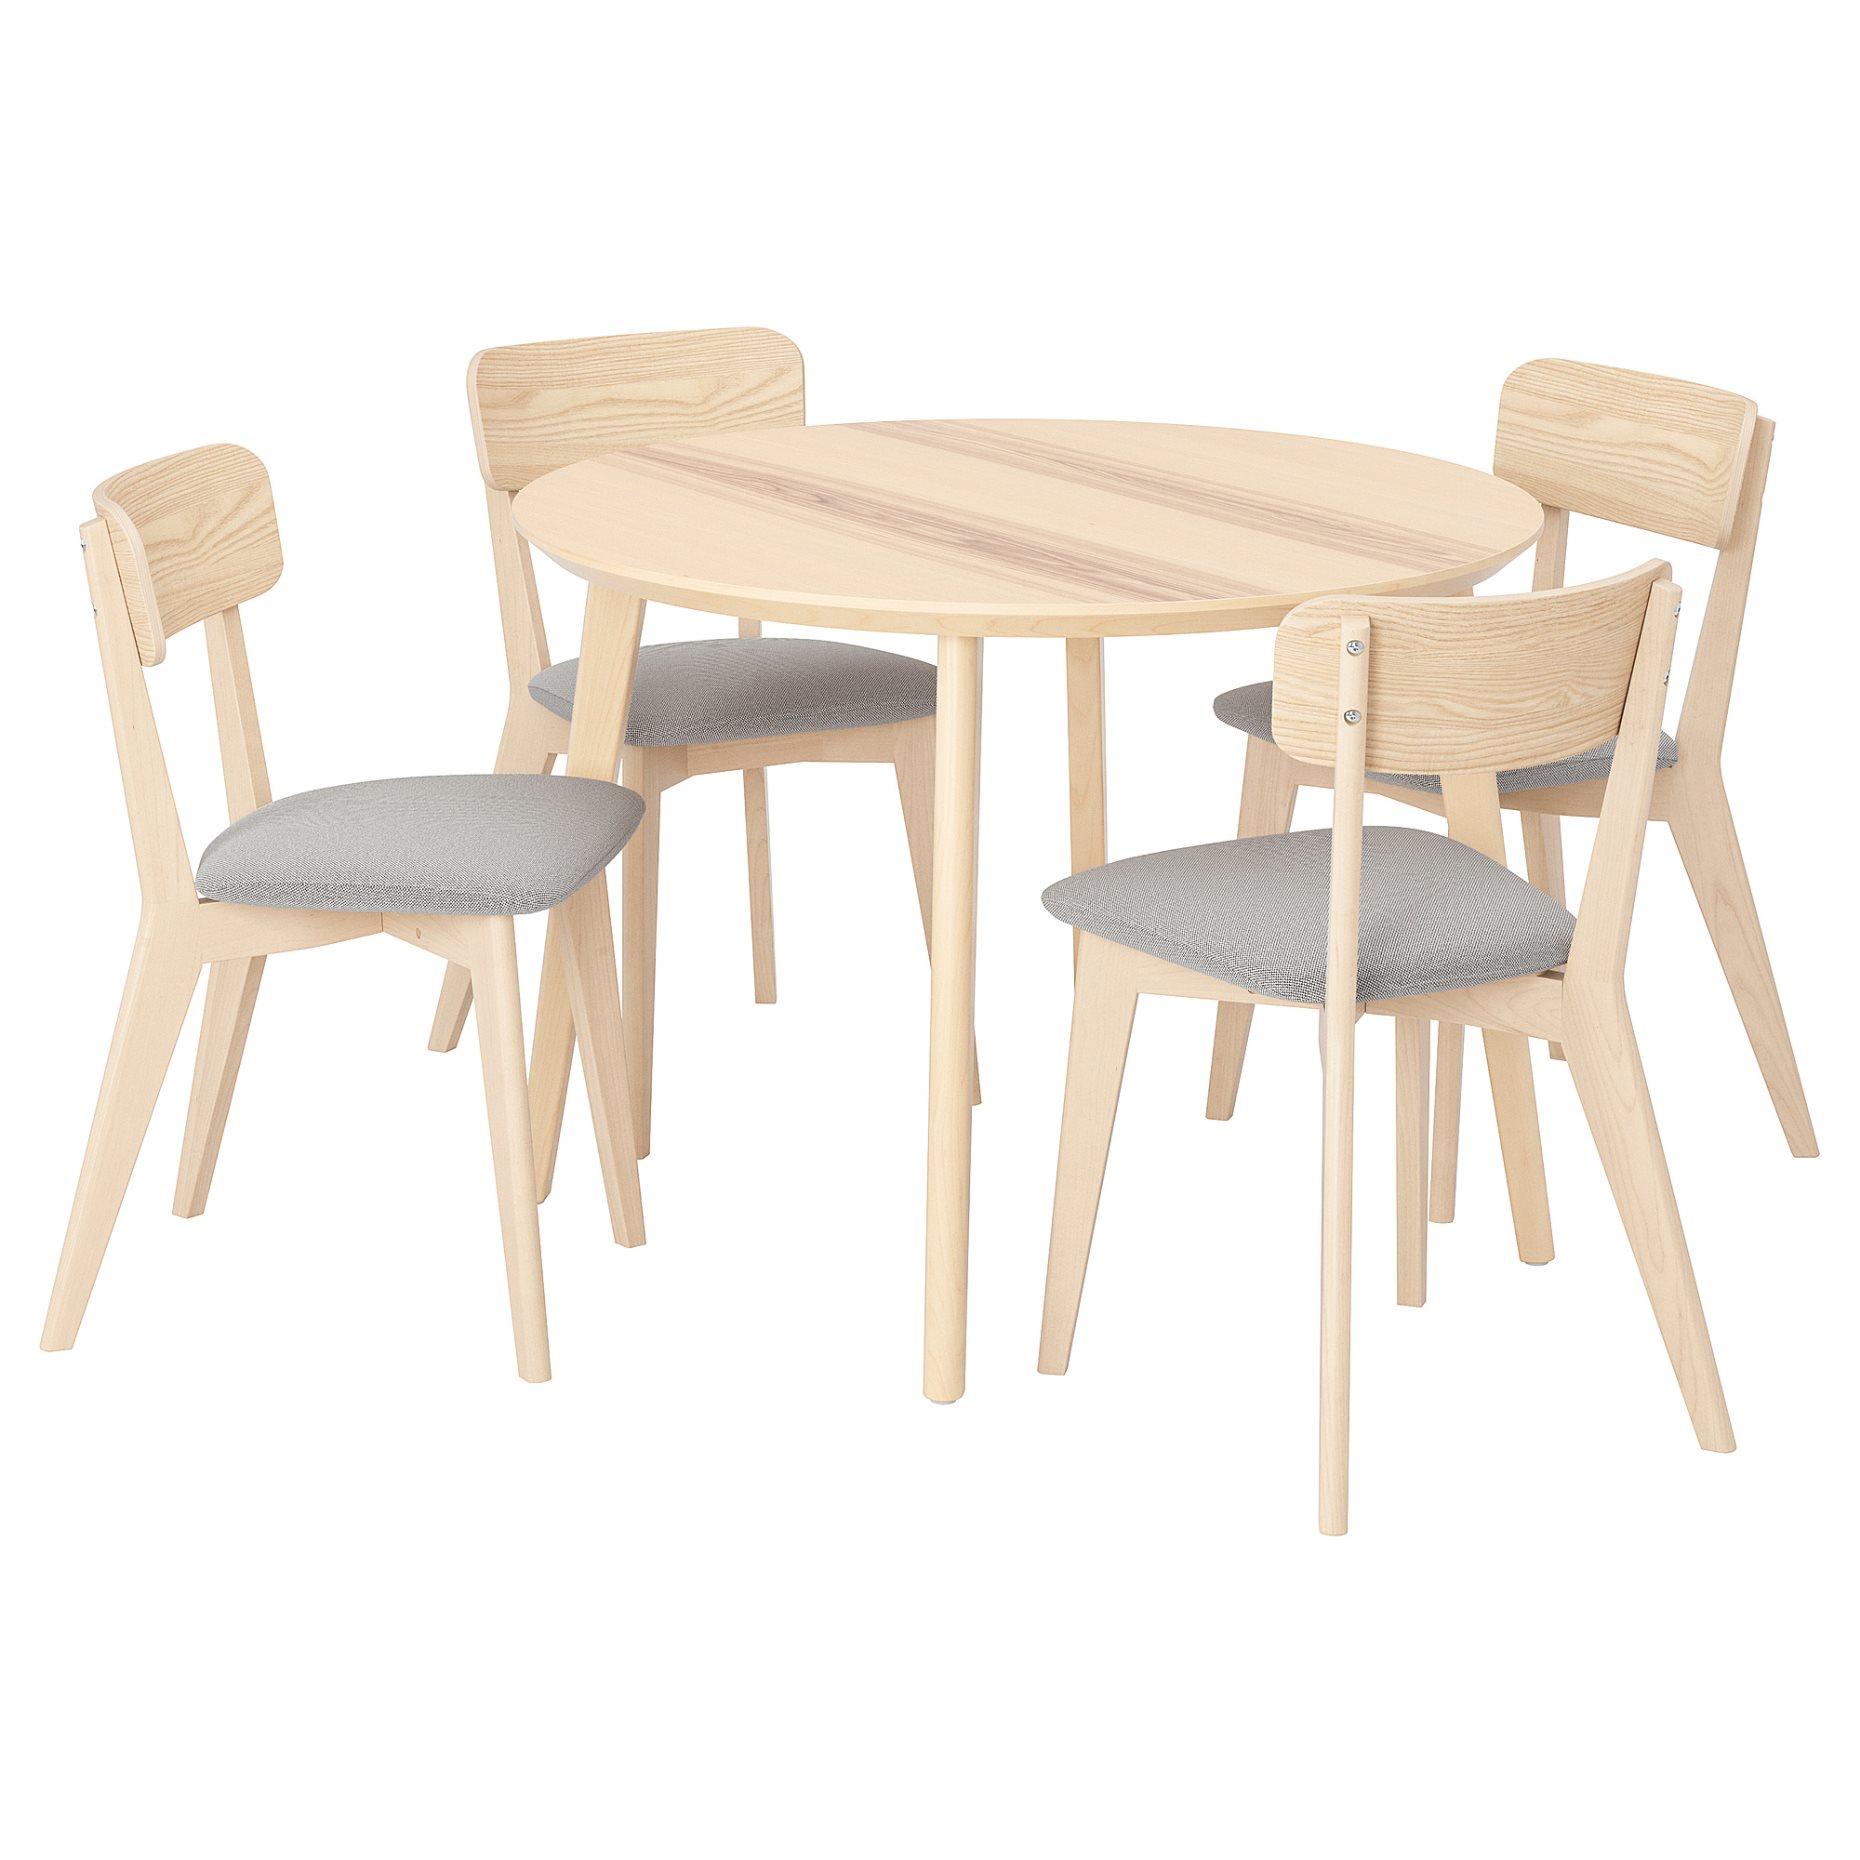 LISABO/LISABO, table and 4 chairs, 105 cm, 795.548.51